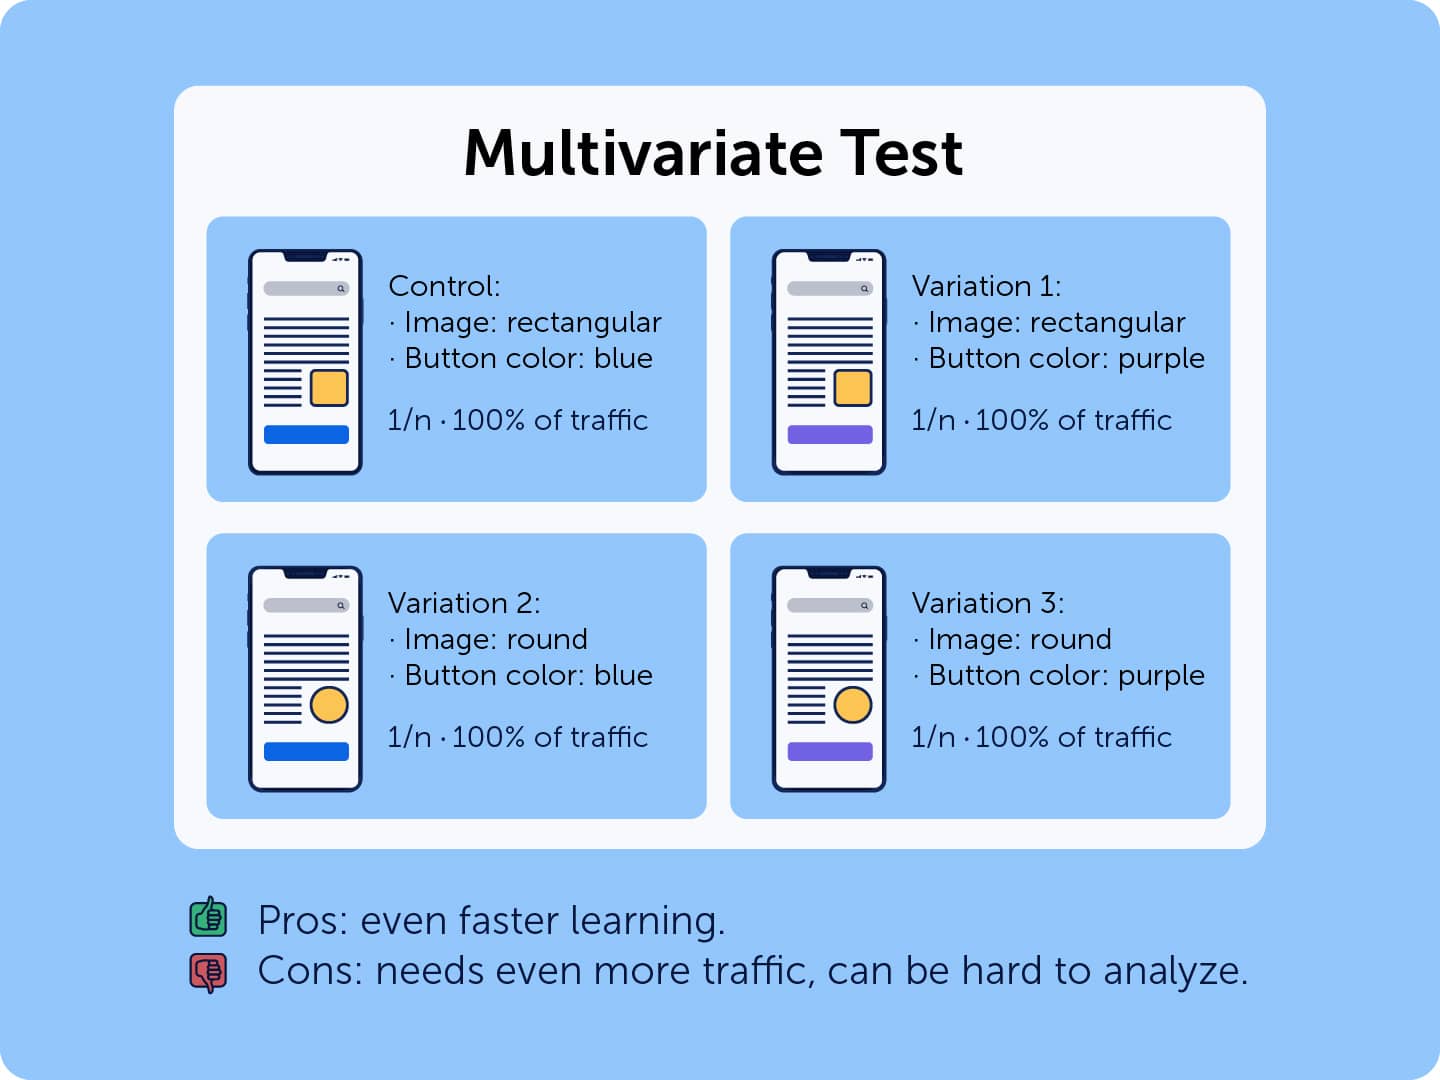 Multivariate test explanation